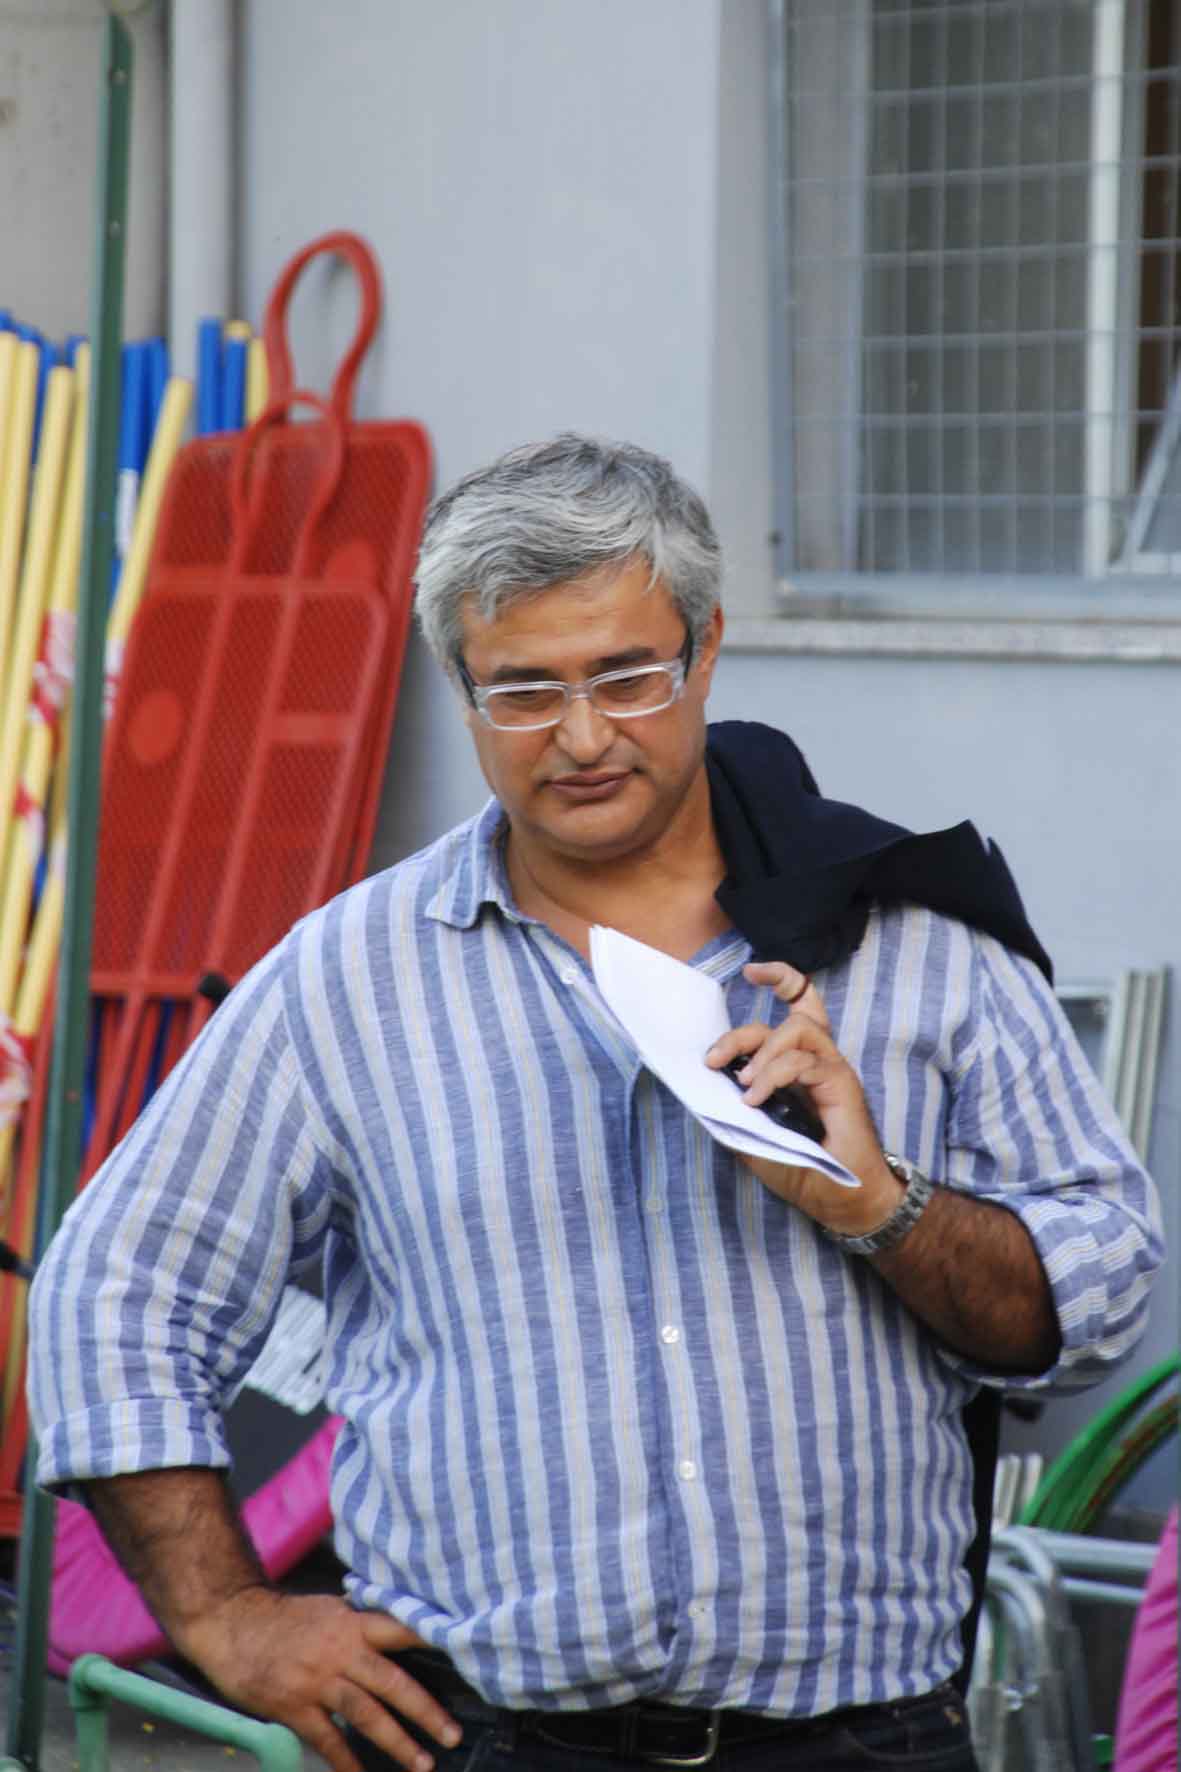 Franco Ceravolo